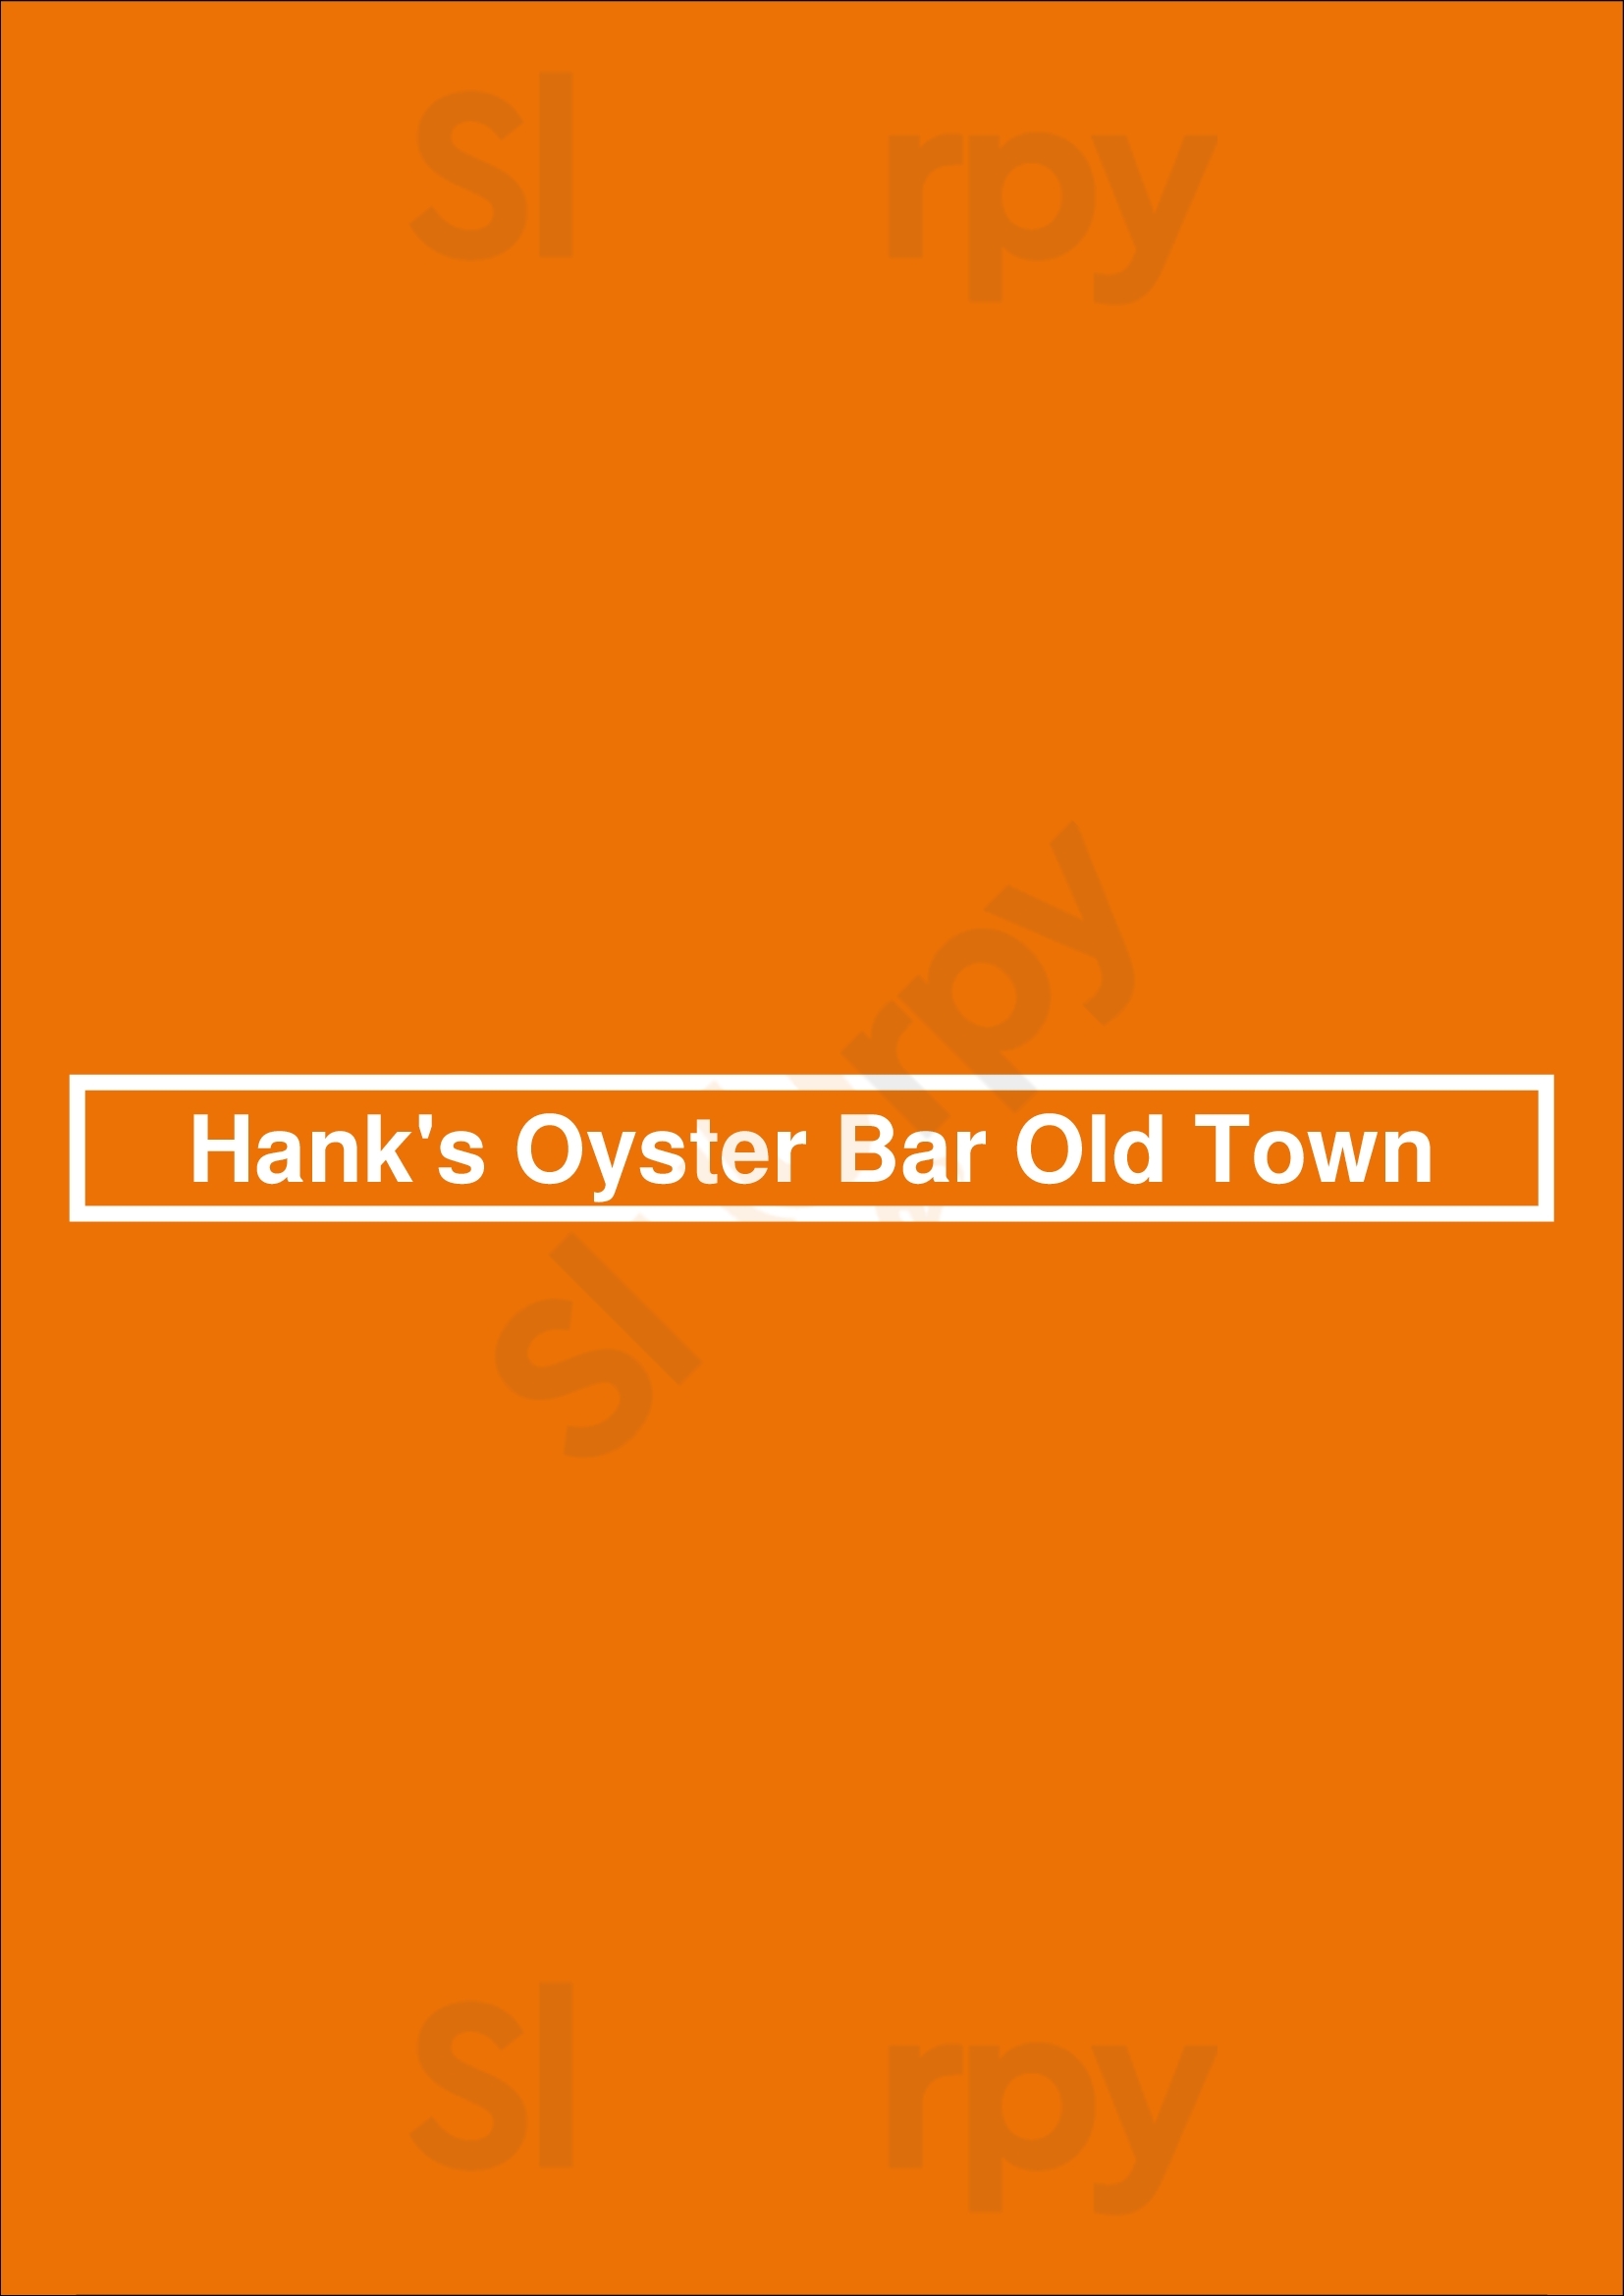 Hank's Oyster Bar Old Town Alexandria Menu - 1